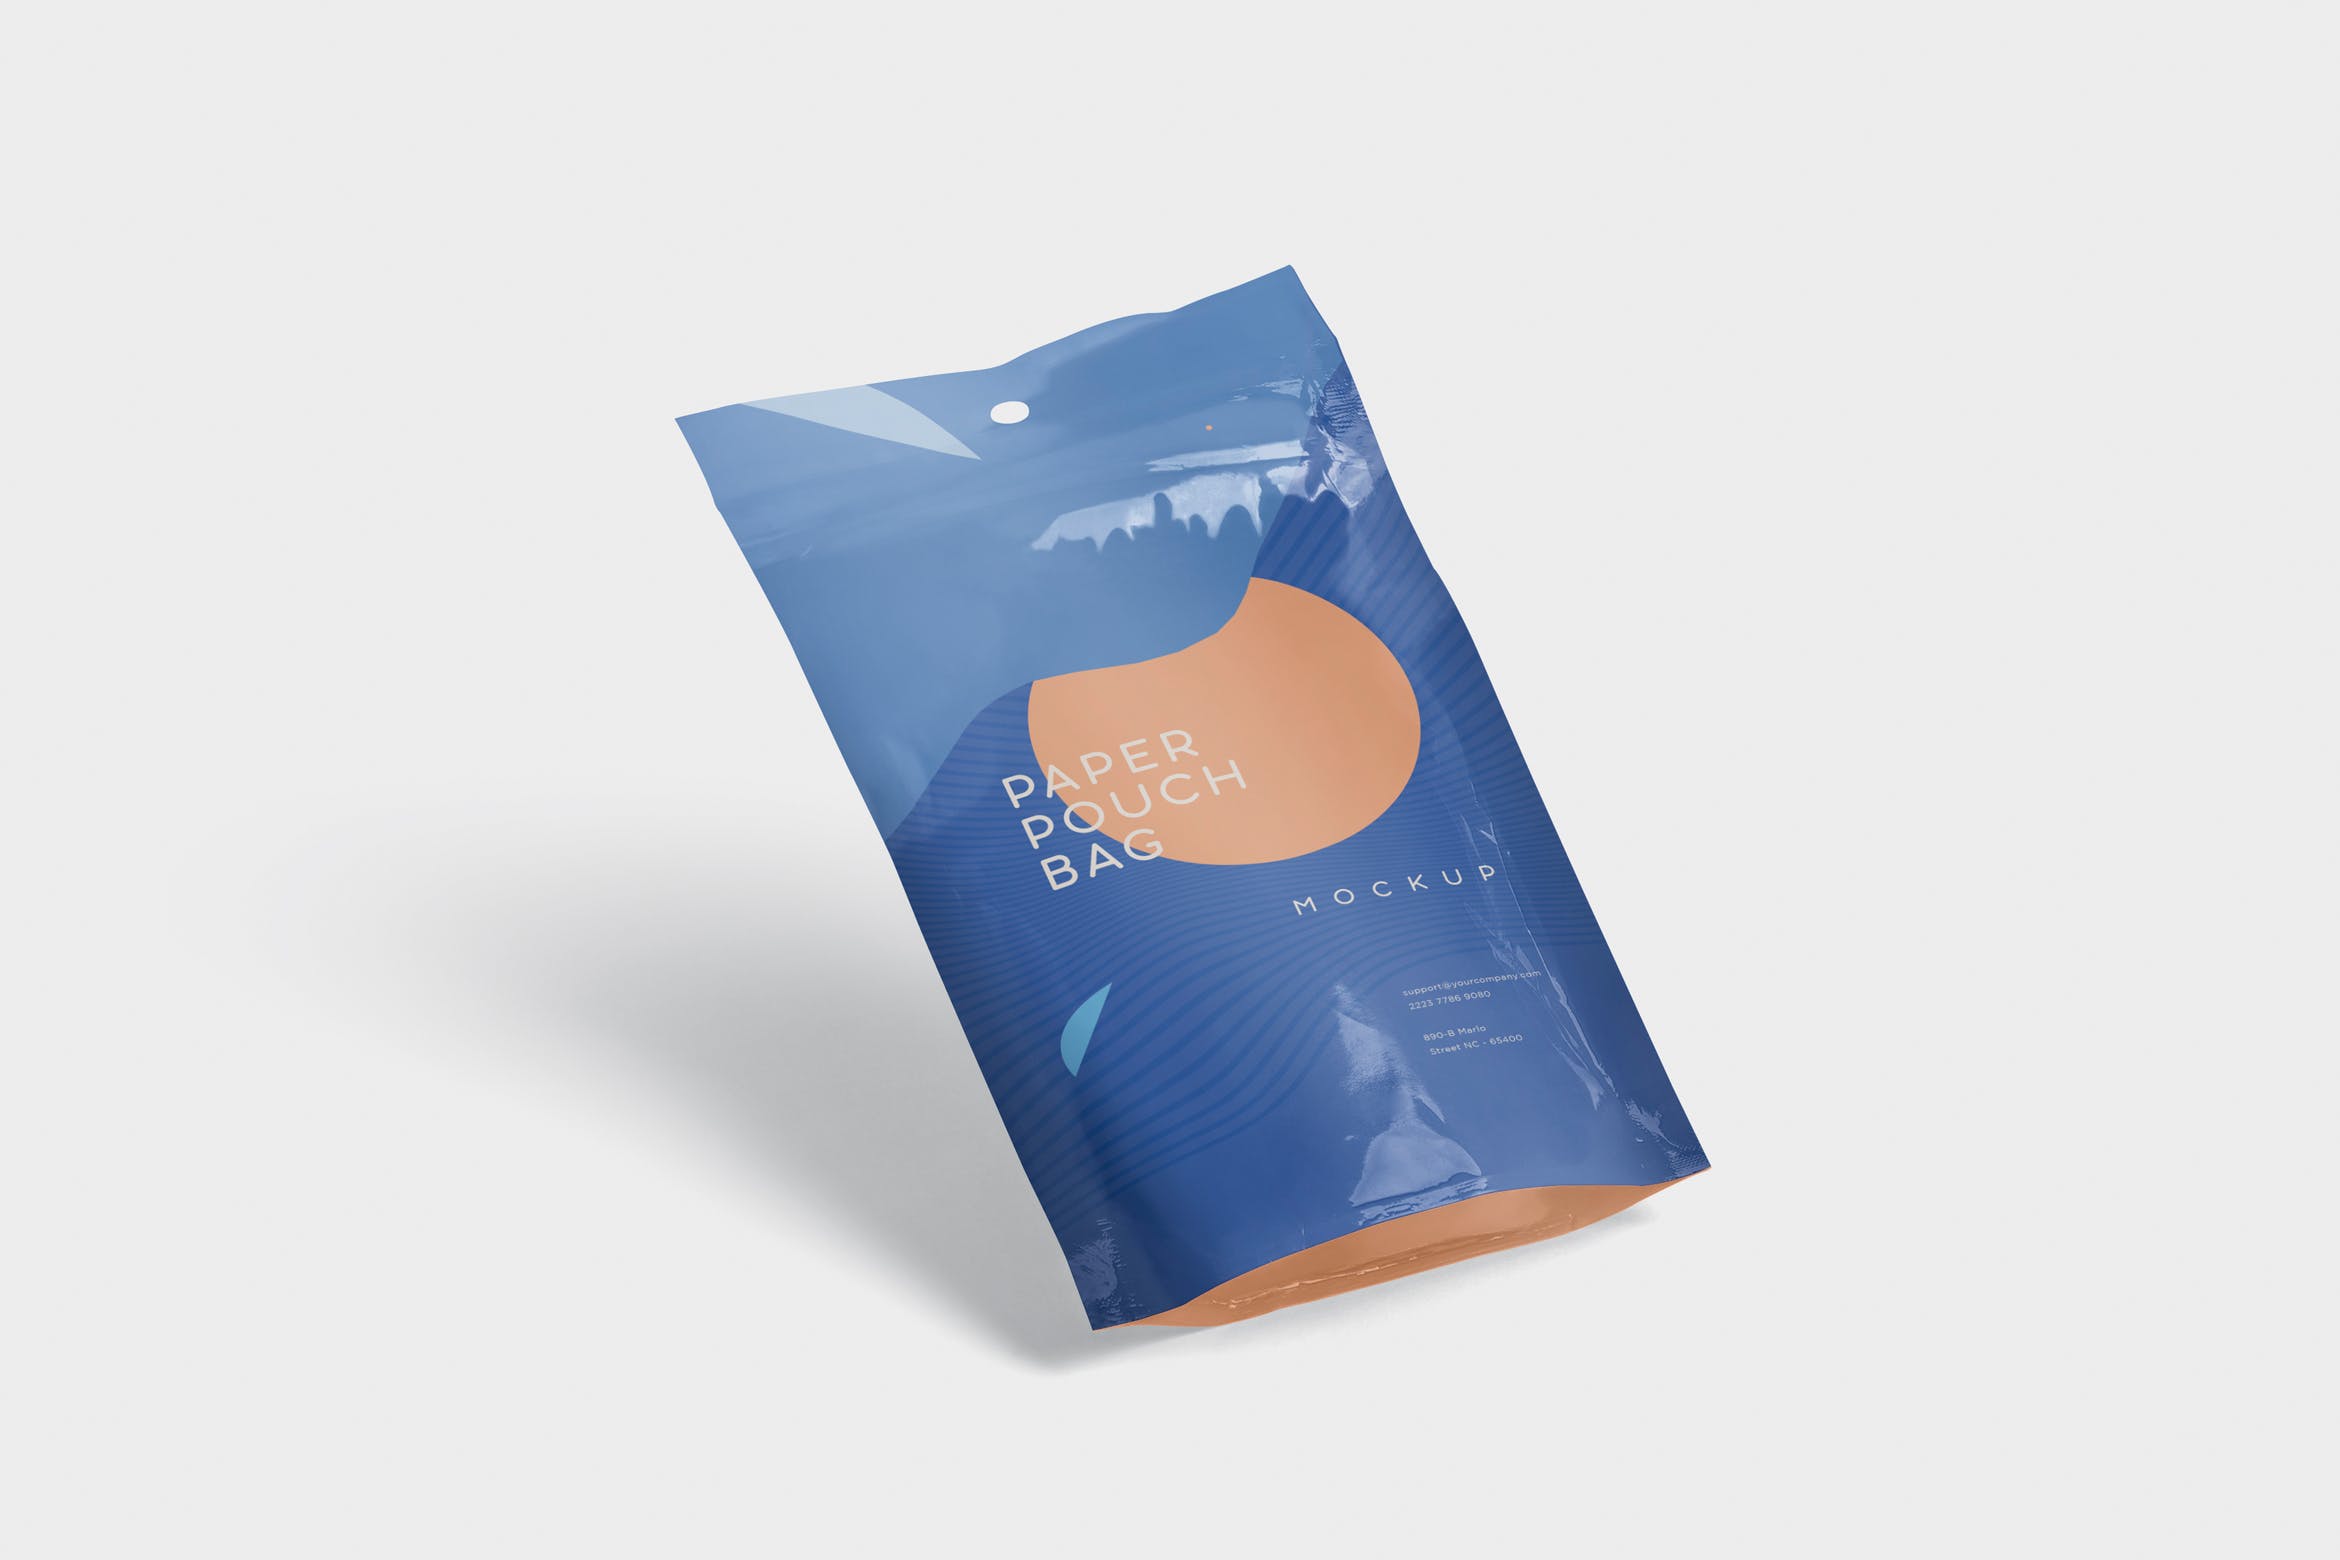 小尺寸零食包装纸袋设计图样机 Paper Pouch Bag Mockup in Small Size插图